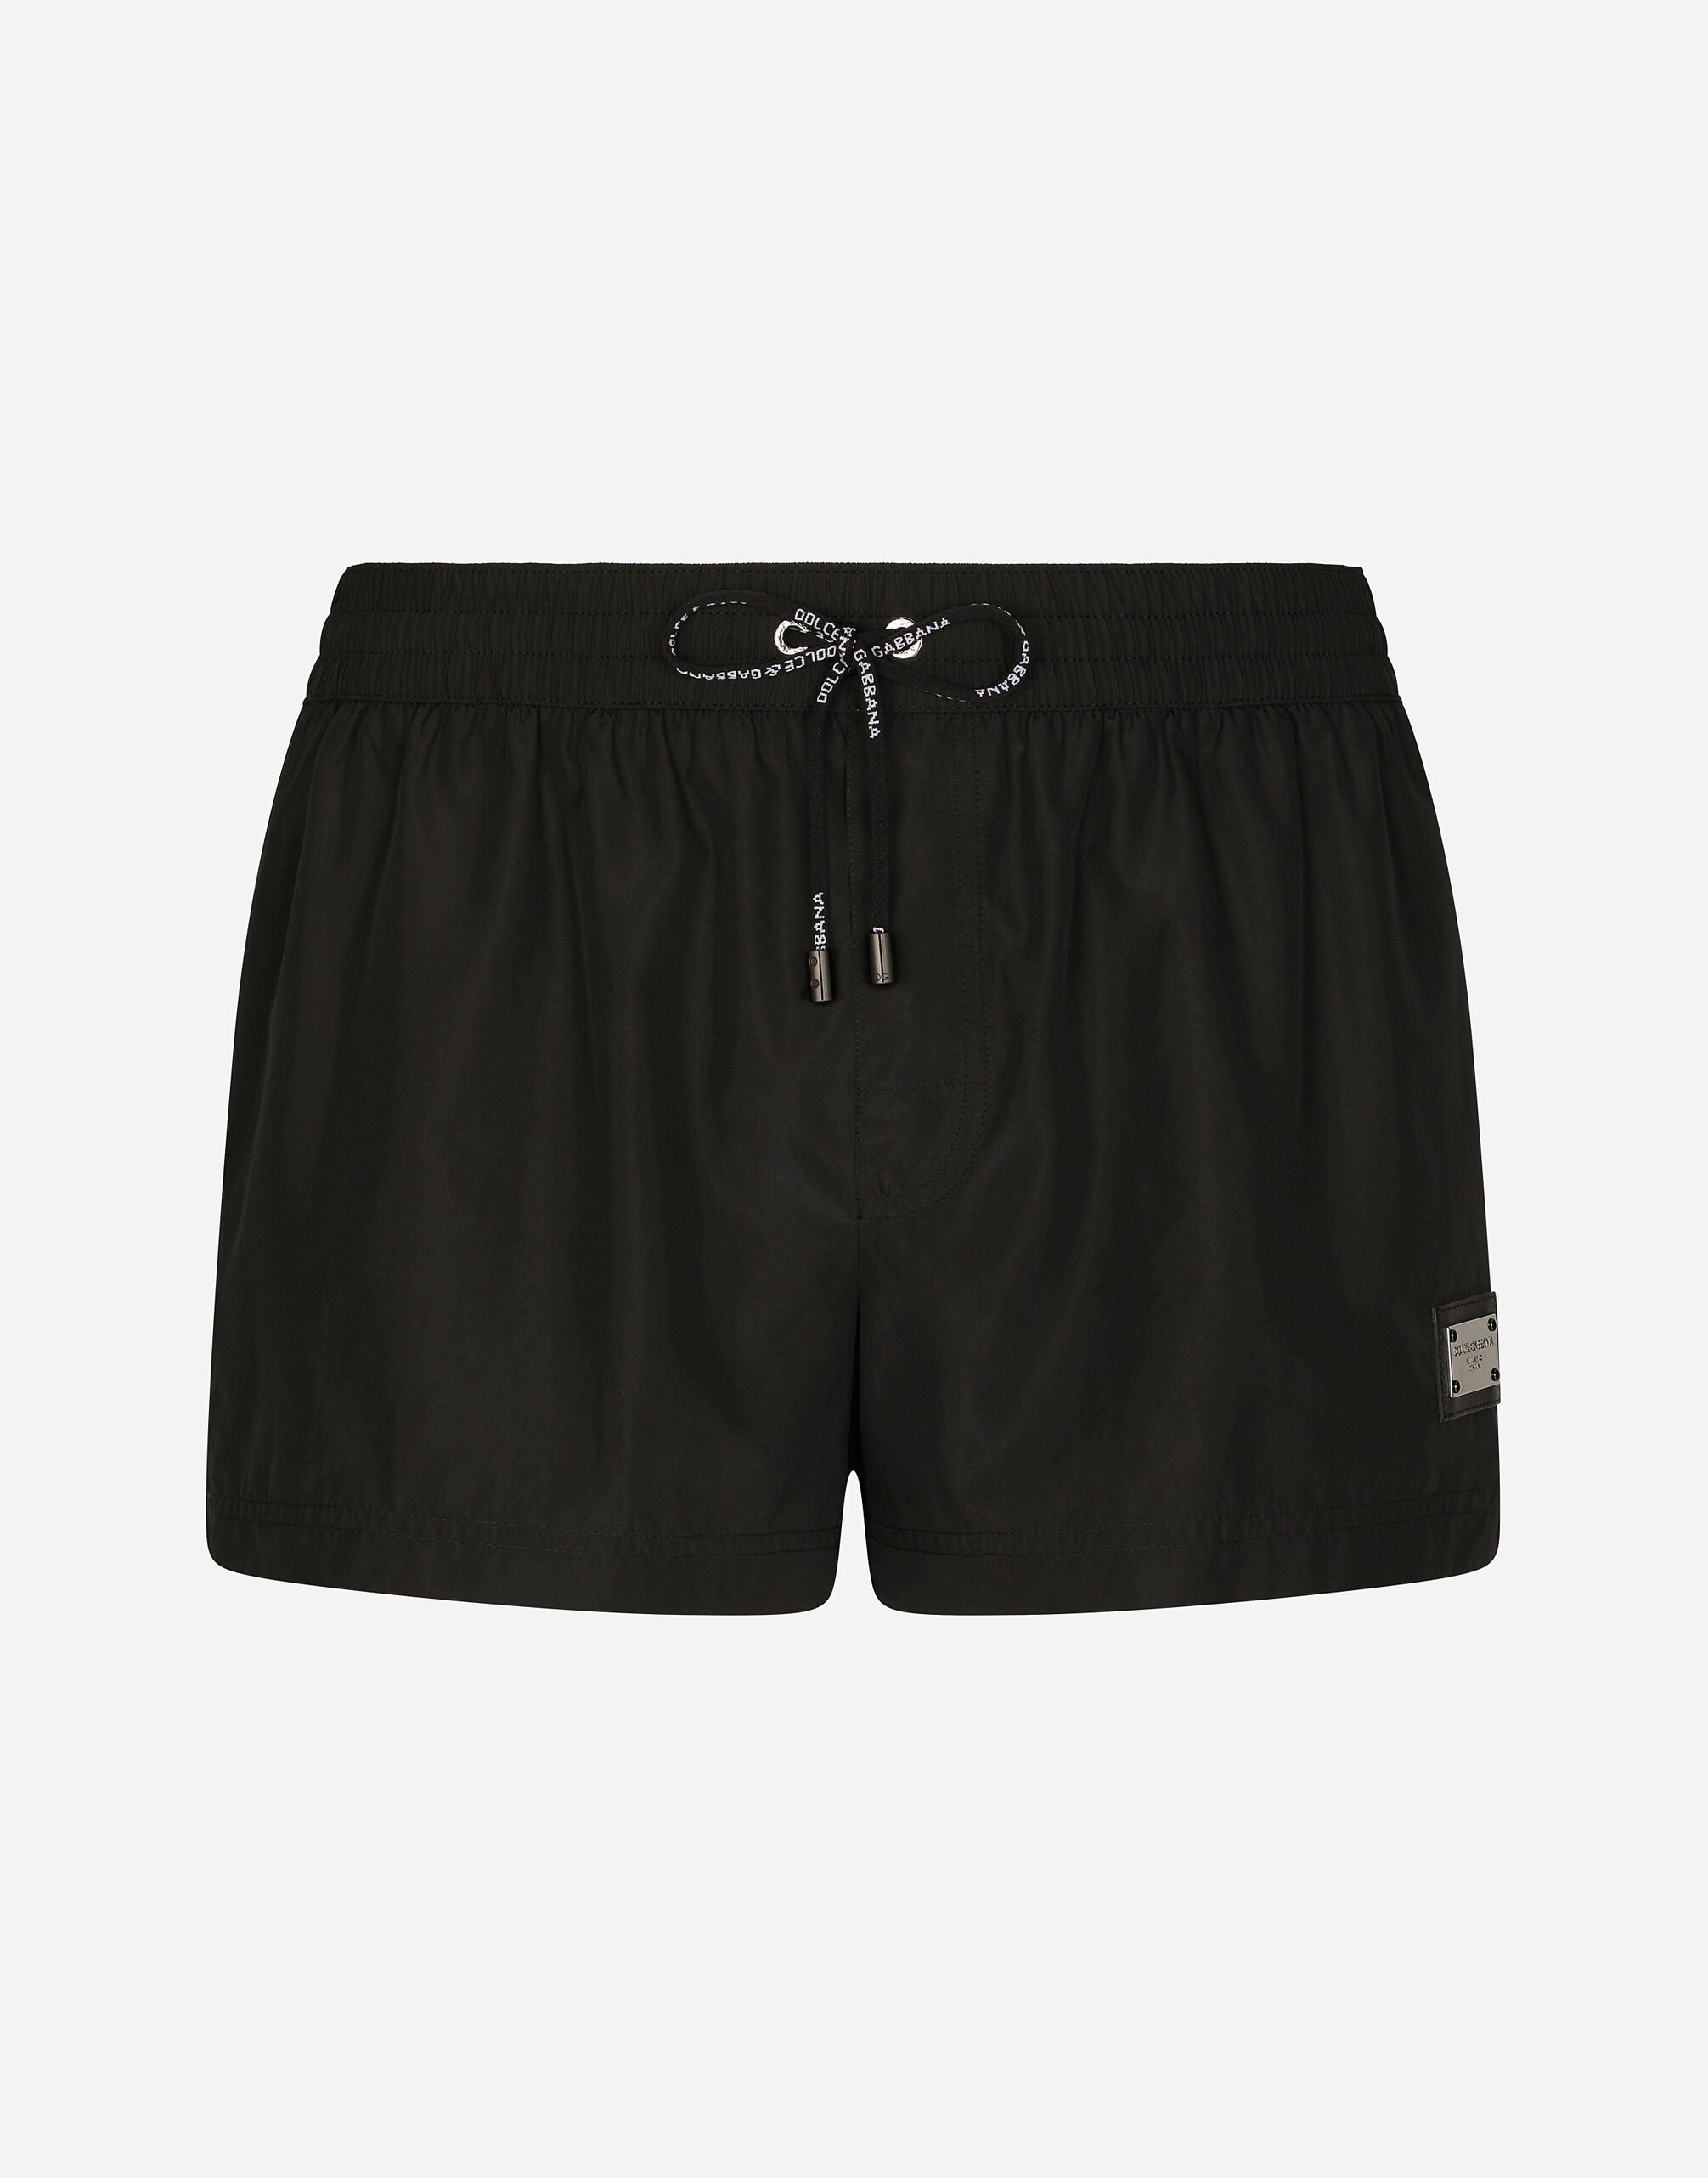 Dolce & Gabbana Short swim trunks with branded tag Black M4A76JONO05